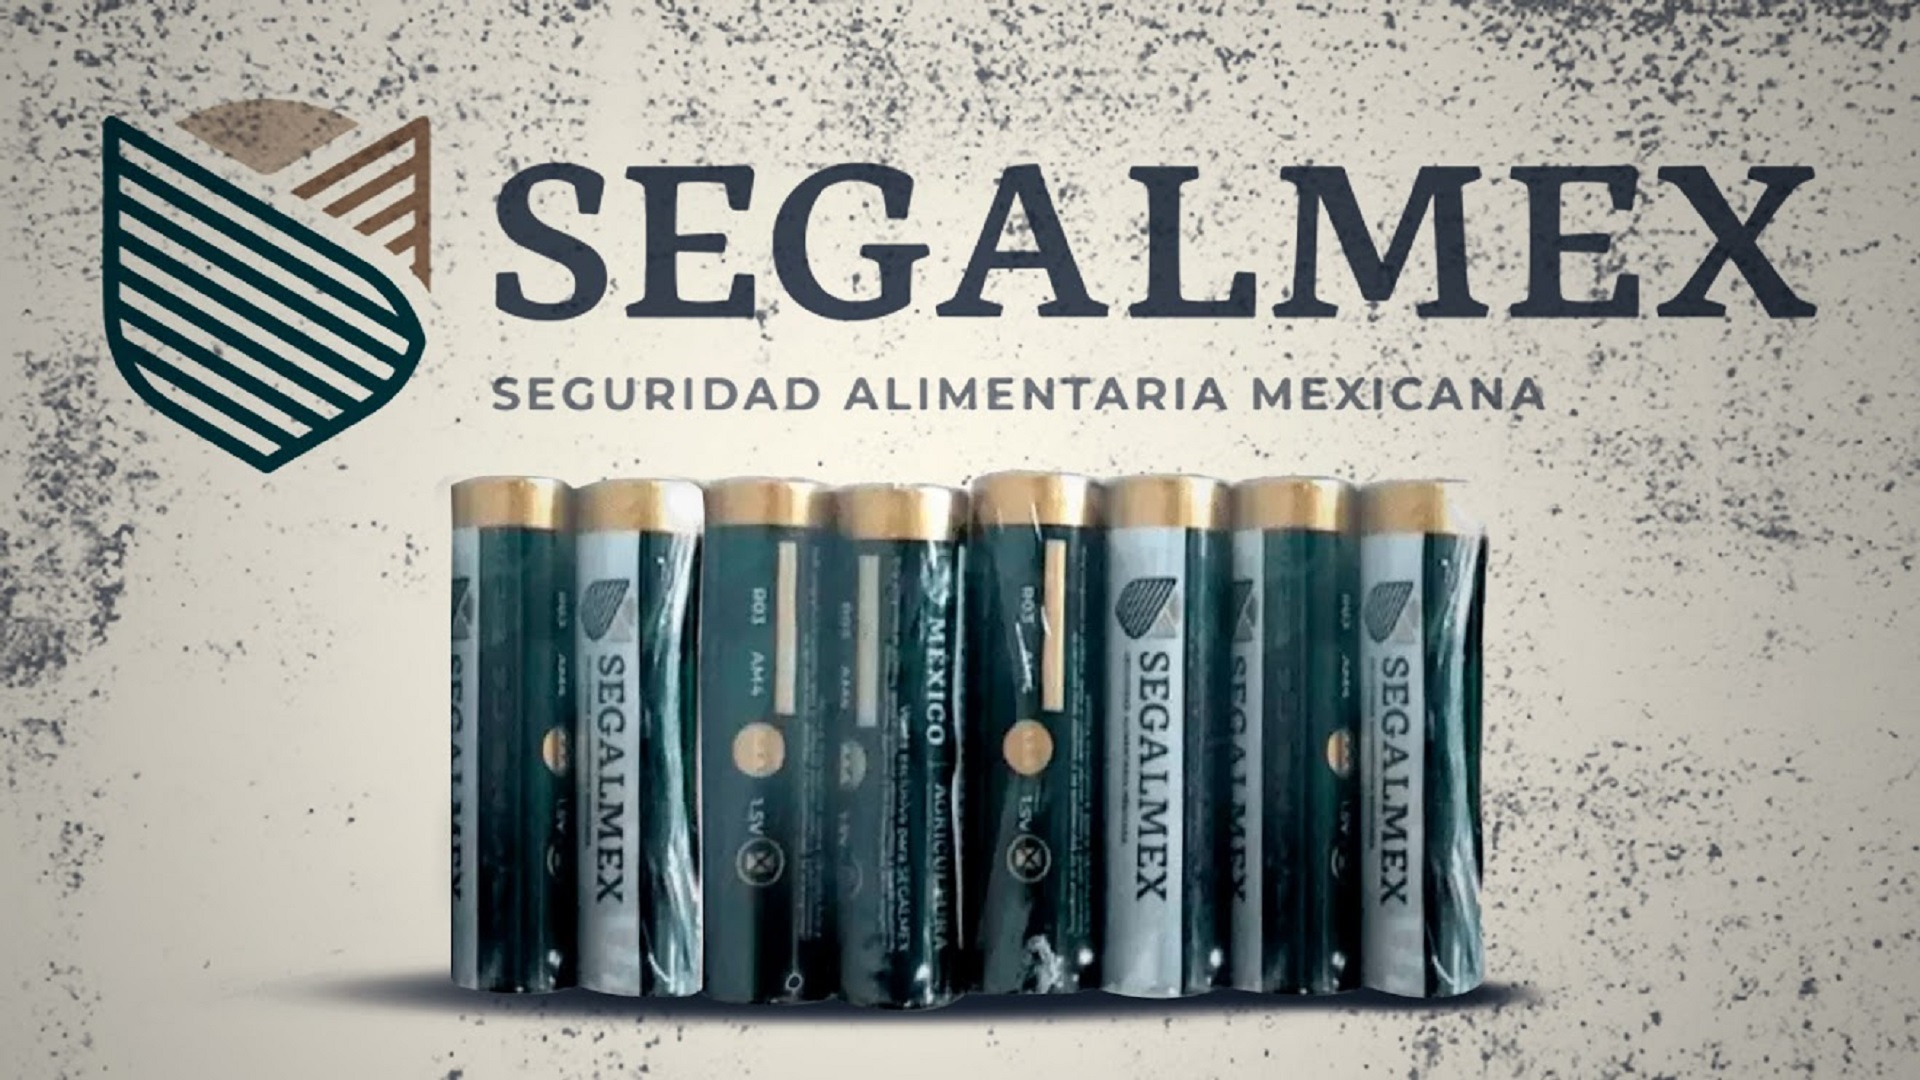 Capturaron en Argentina a ex director de Segalmex  acusado de desfalco millonario